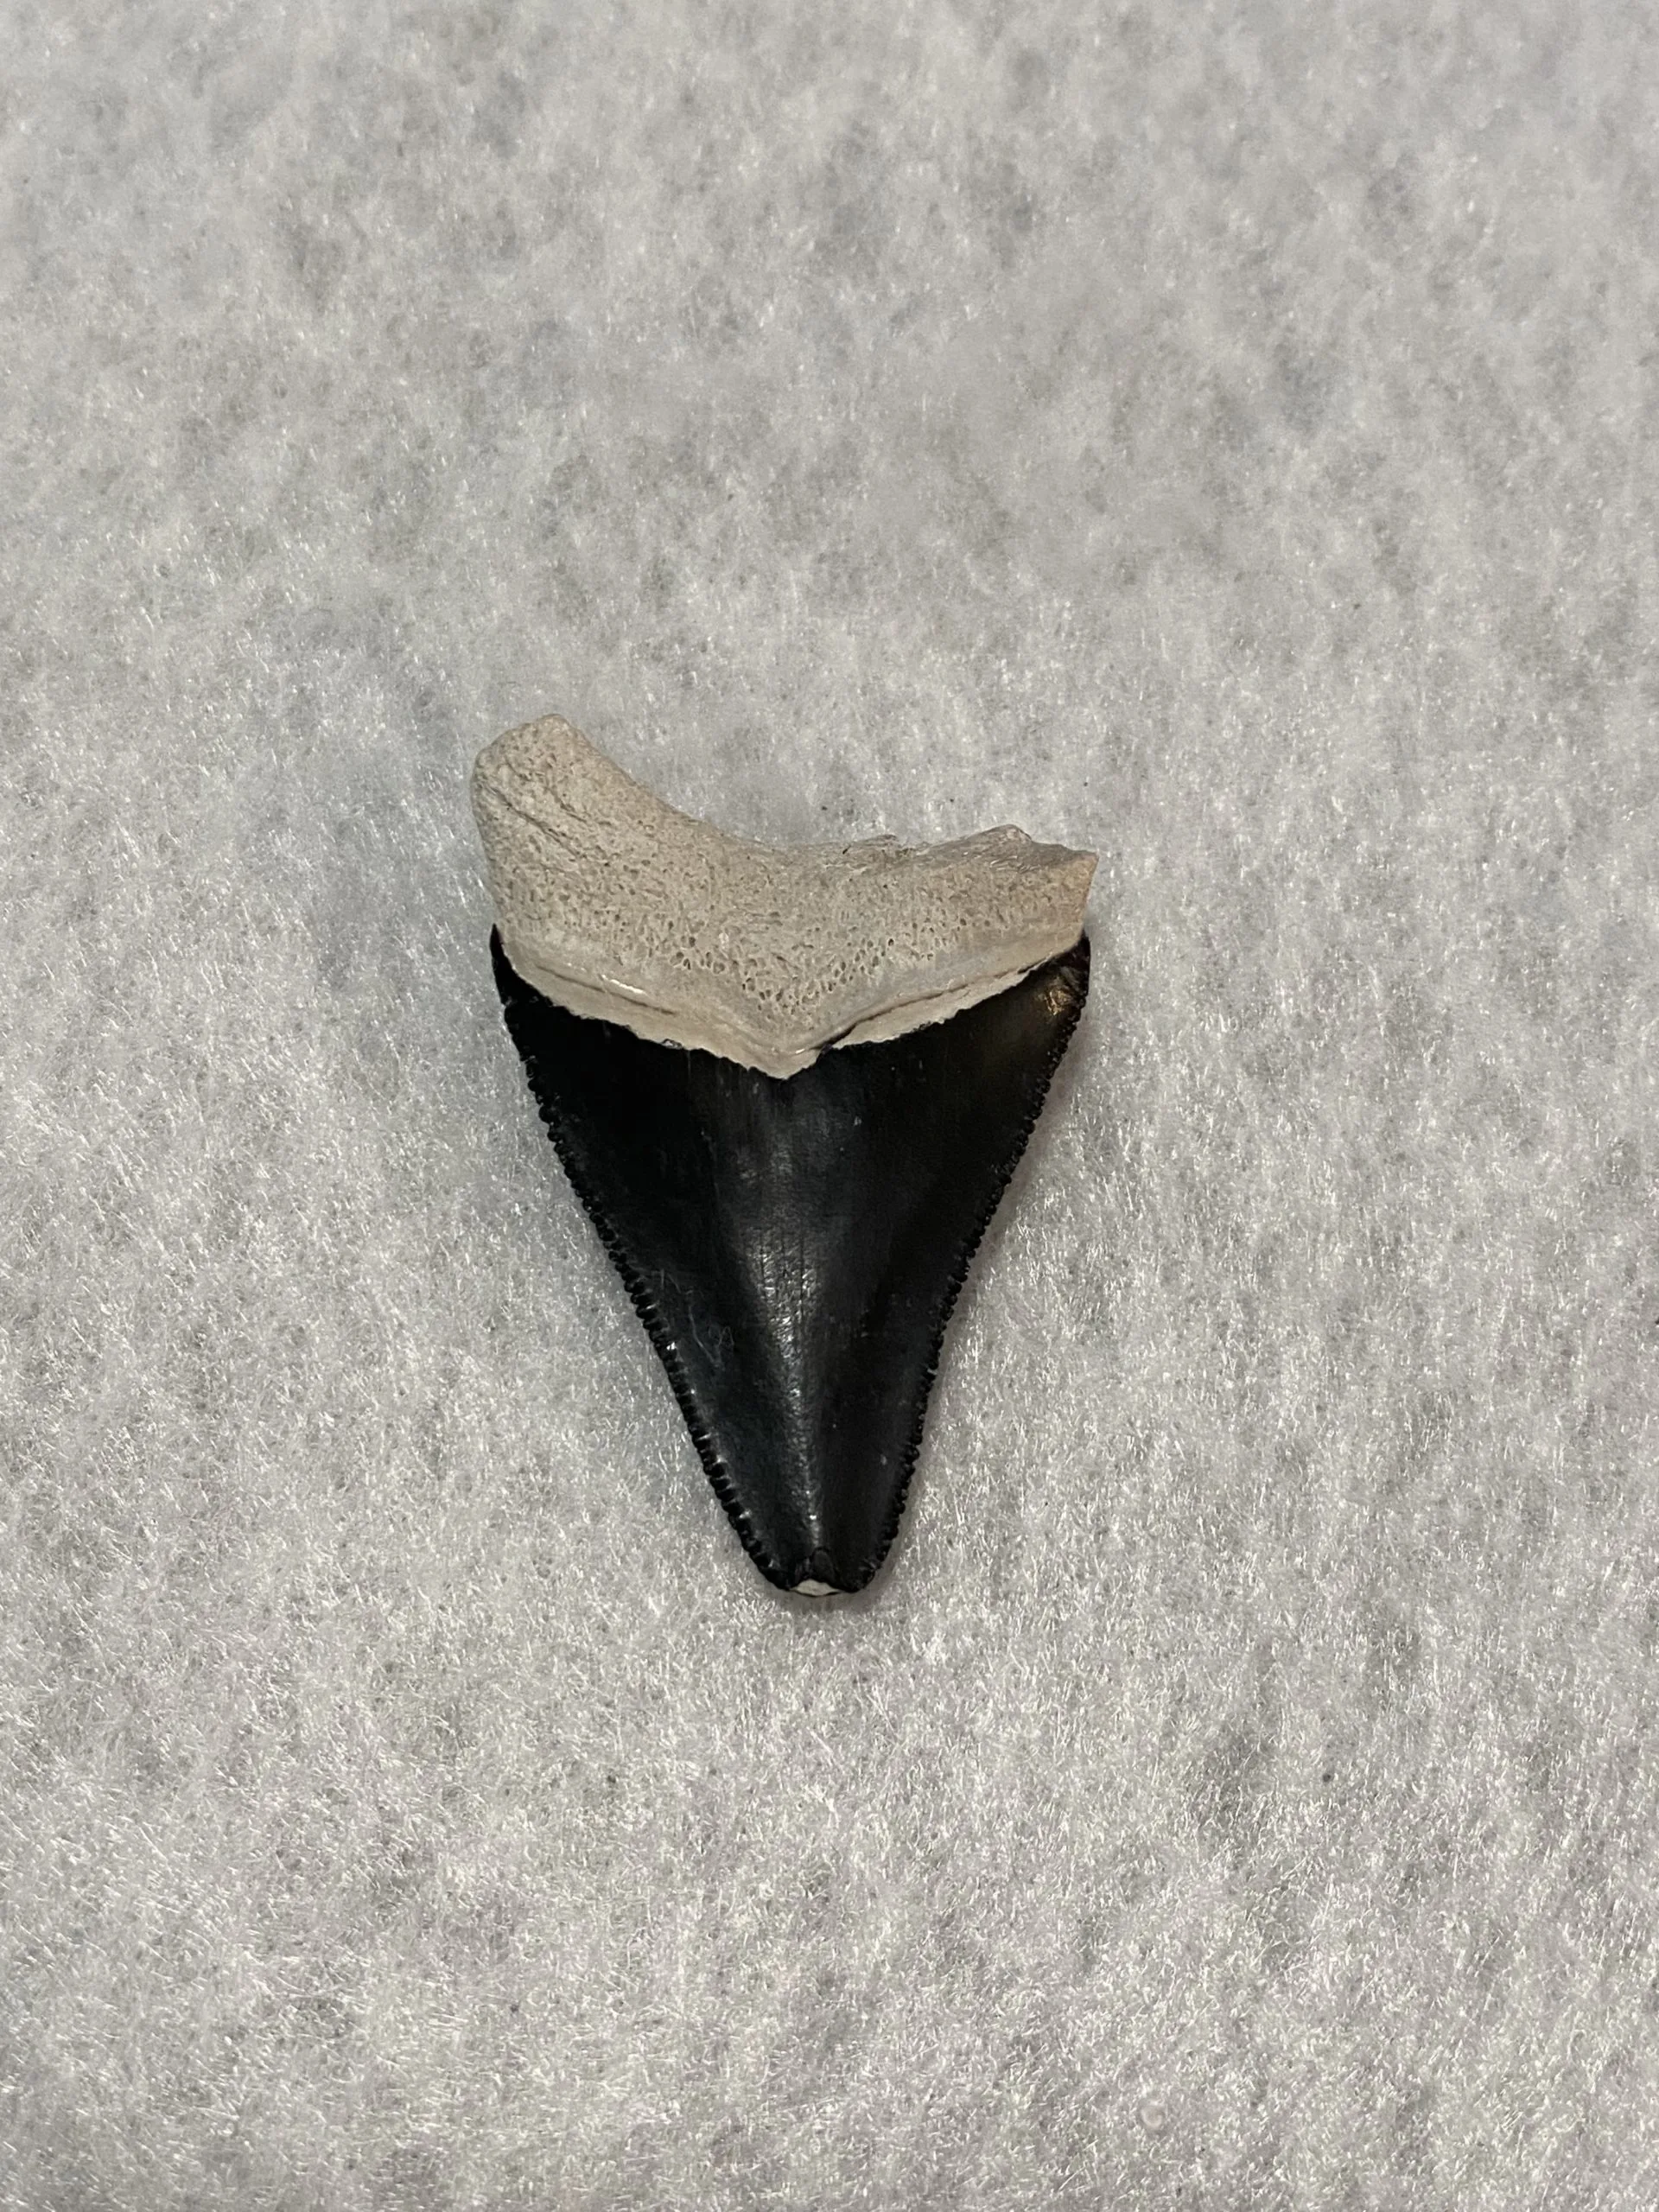 Megalodon Tooth  Bone Valley, Florida 2.00 inch Prehistoric Online